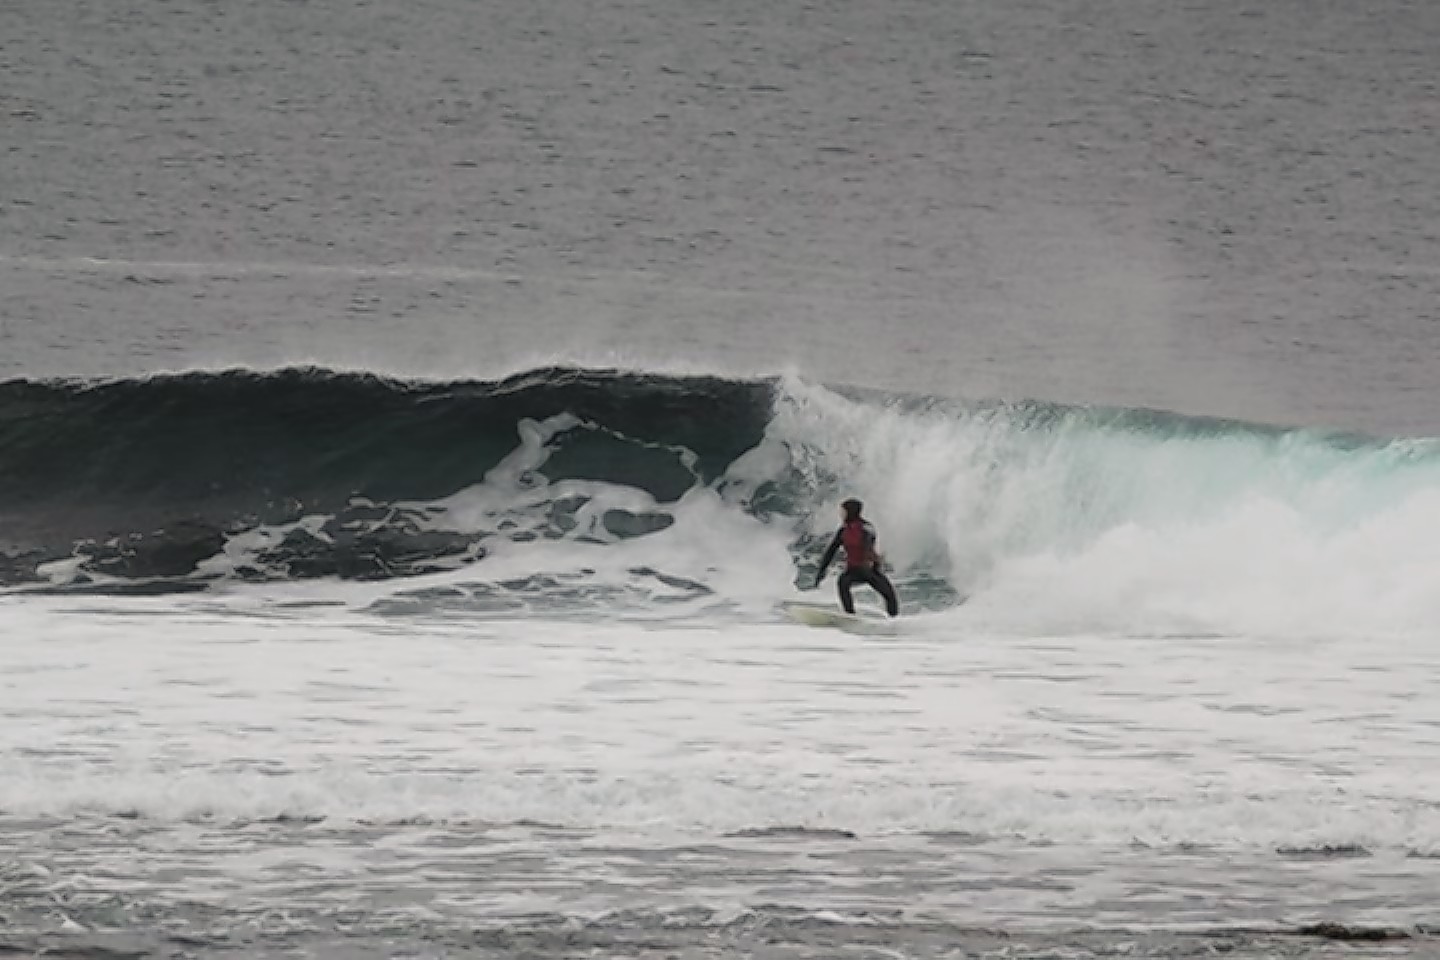 Surfer Jennifer Wood riding the waves near Thurso.